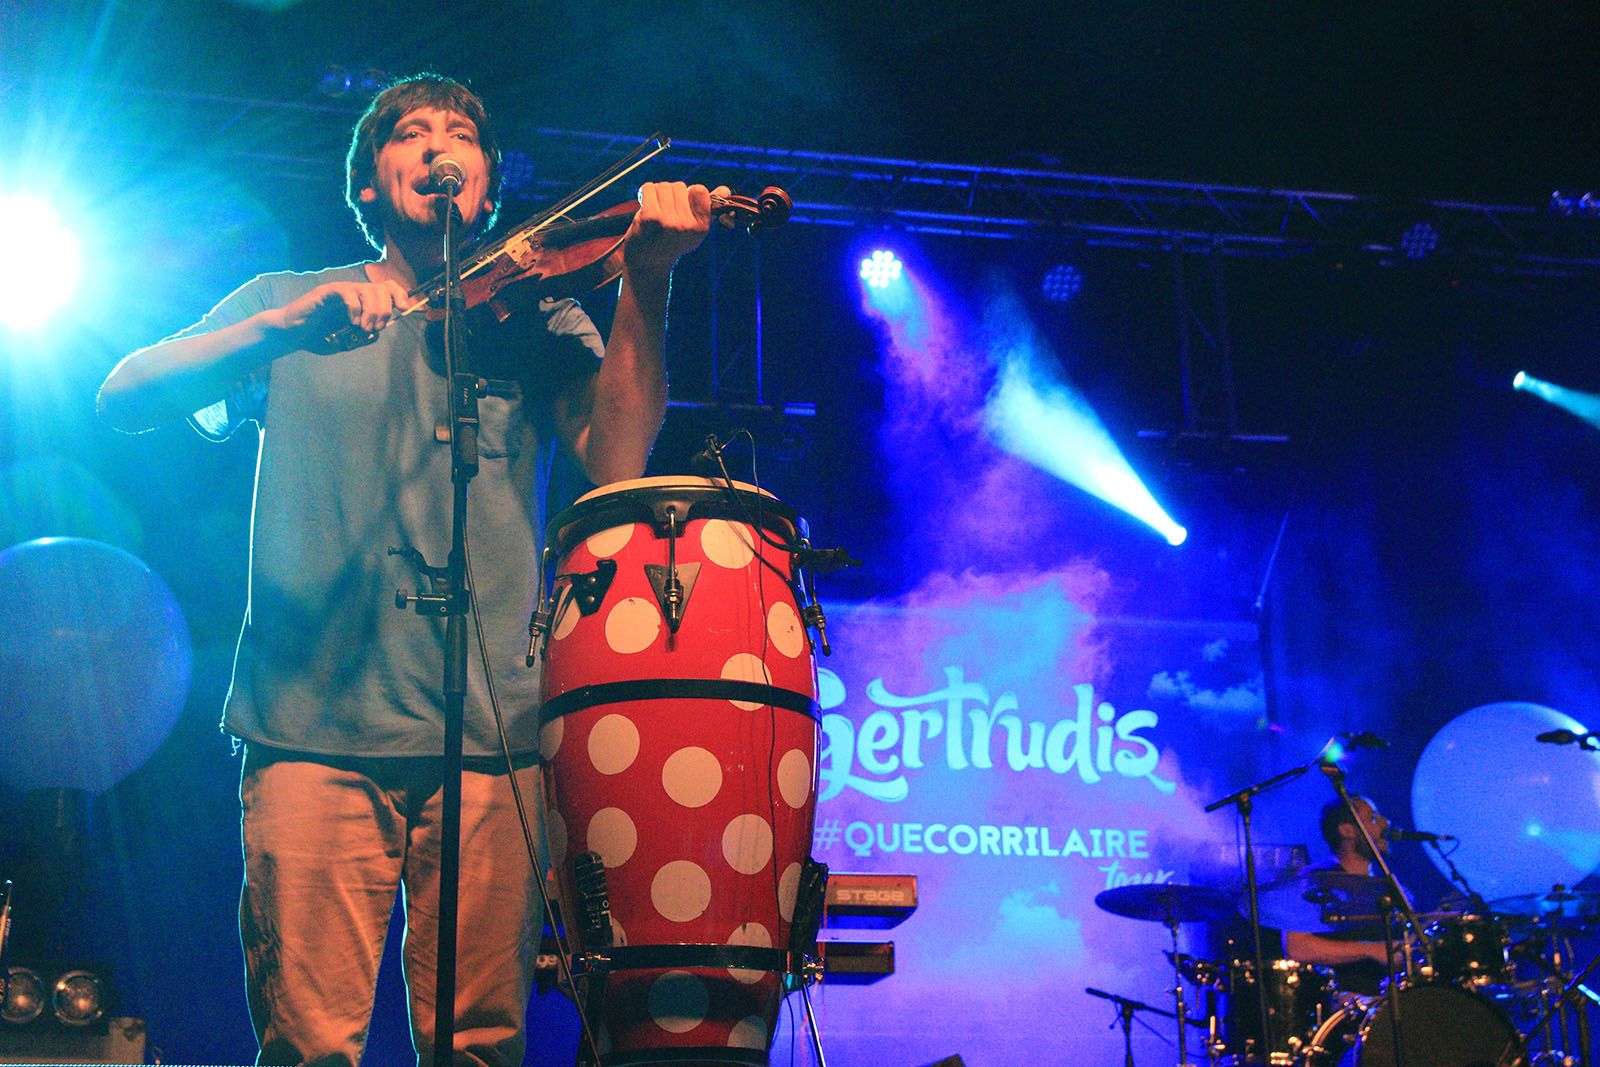 Concert de "Gertrudis".Foto: Lali Álvarez